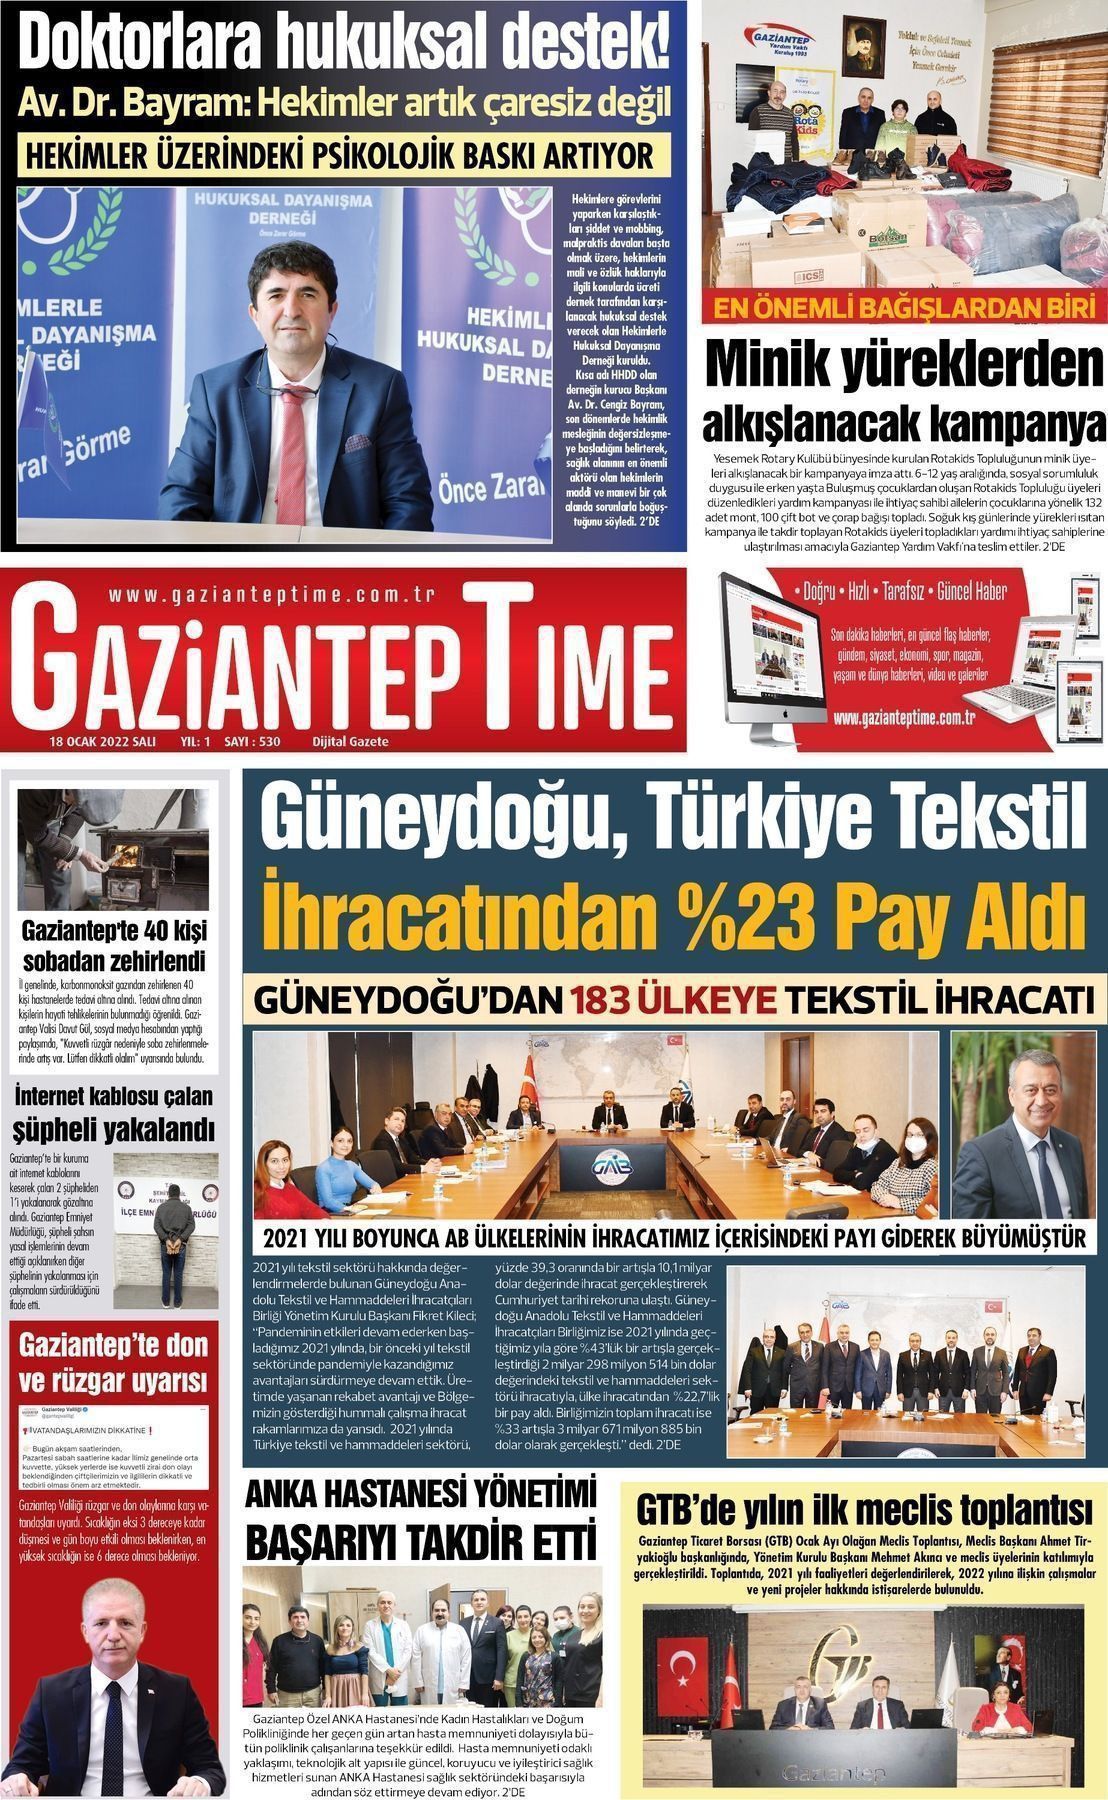 19 Ocak 2022 Gaziantep Time Gazete Manşeti